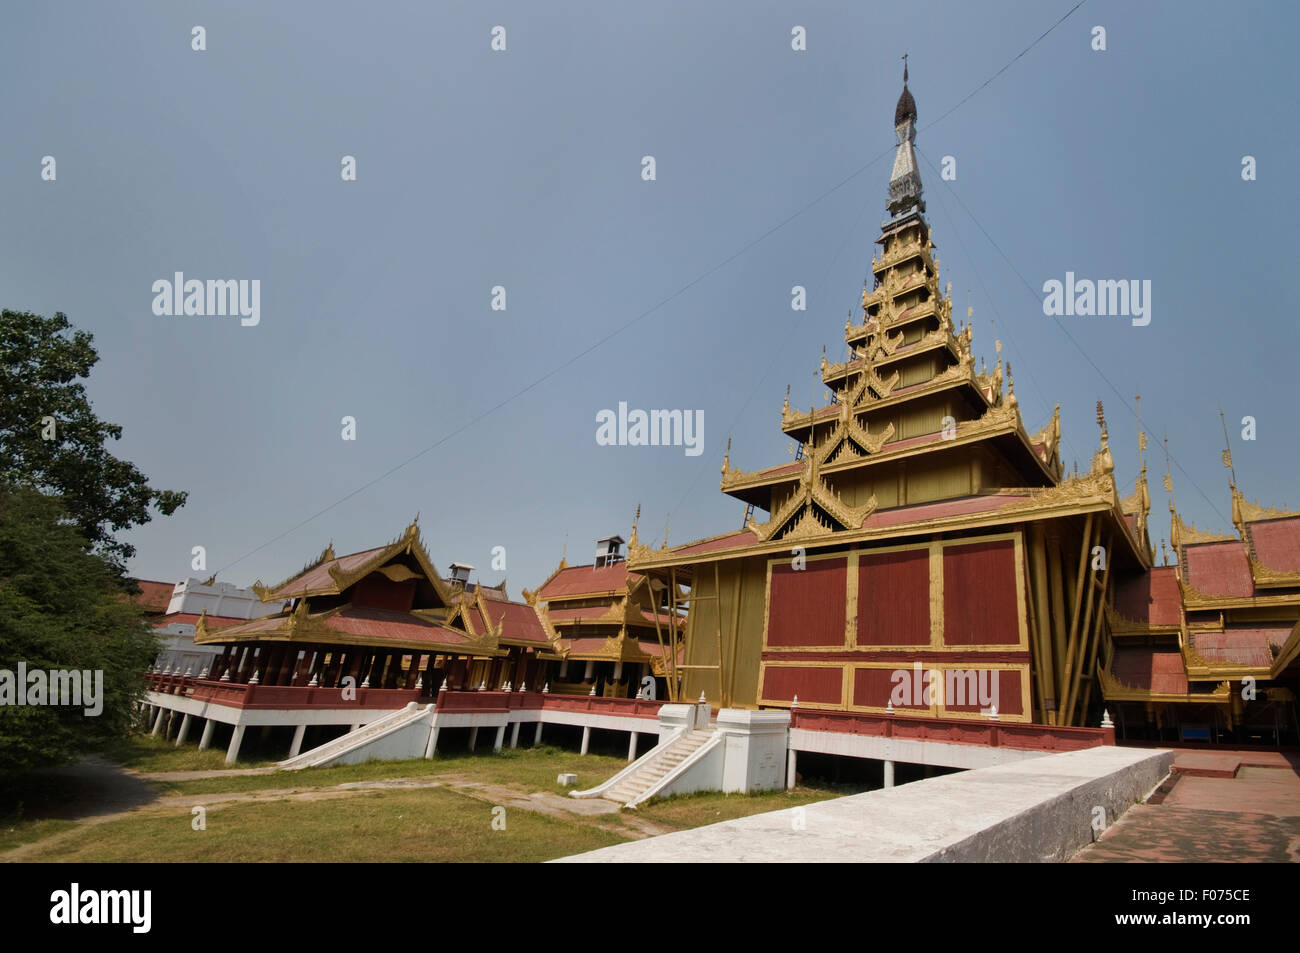 Asien, MYANMAR (BURMA), Mandalay, Königspalast (ursprünglich erbaut von König Mindon 1857-59, 1990er Jahre umgebaut), Eingang Pagode Stockfoto